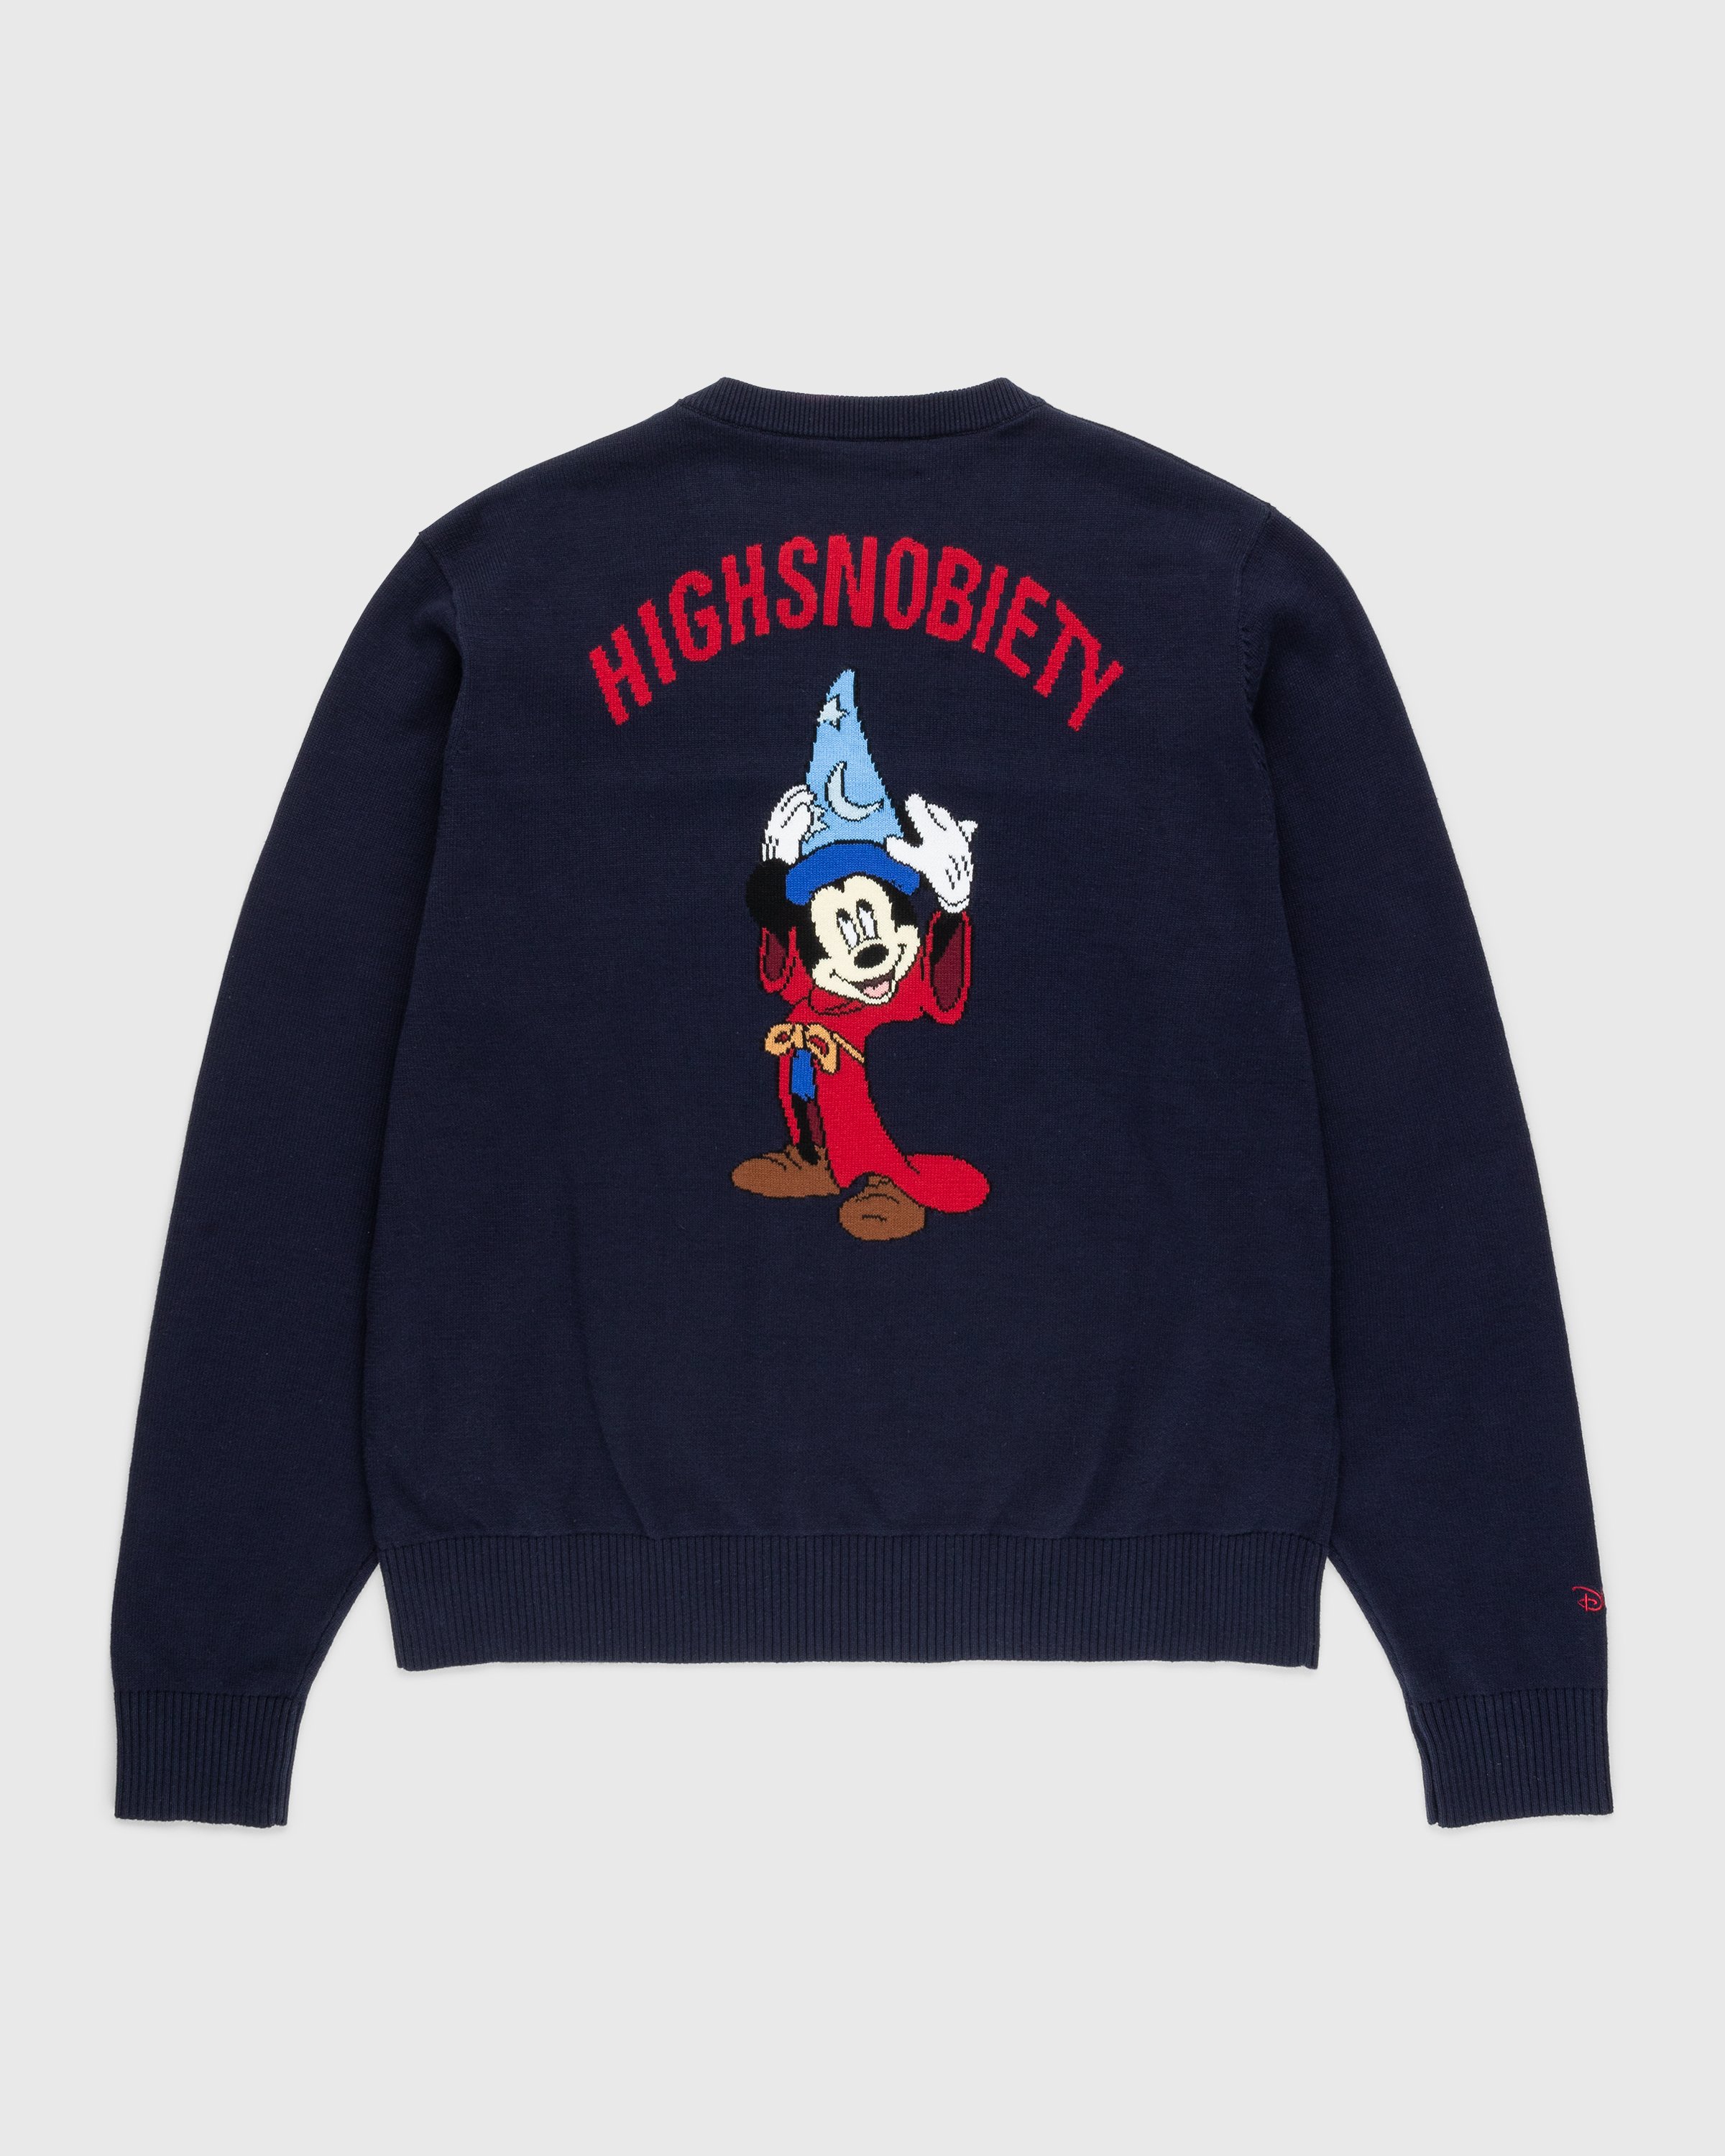 Disney Fantasia x Highsnobiety - Intarsia Knit Sorcerer Mickey Sweater Dark Blue - Clothing - Blue - Image 1